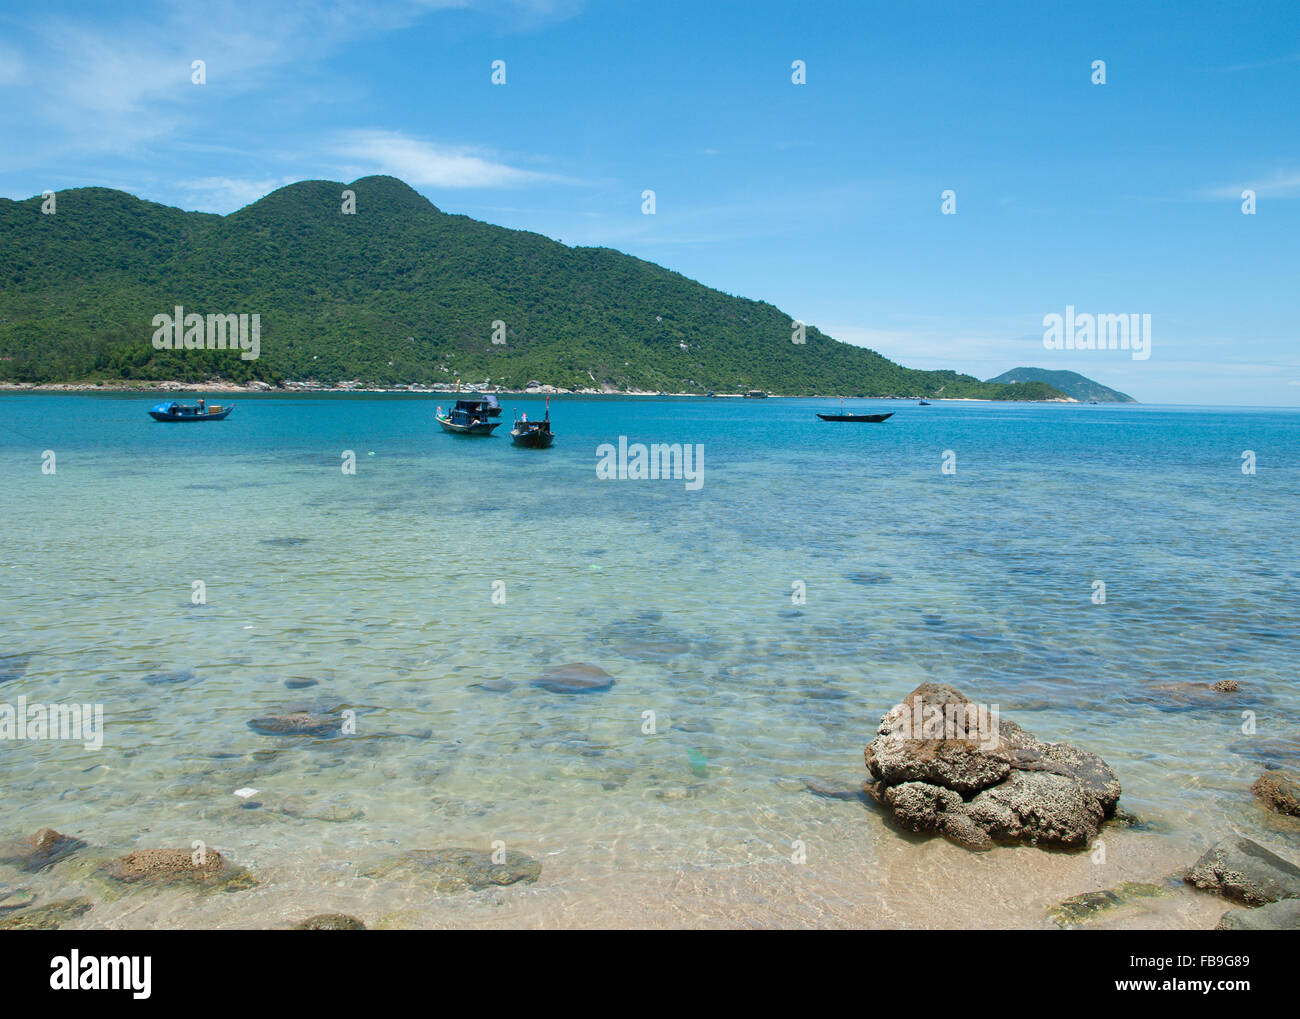 Sunny and warm tropical beach. Bay of Cham Islands near Hoi An( Hoian) and Da Nang( Danang), Central Vietnam. Stock Photo